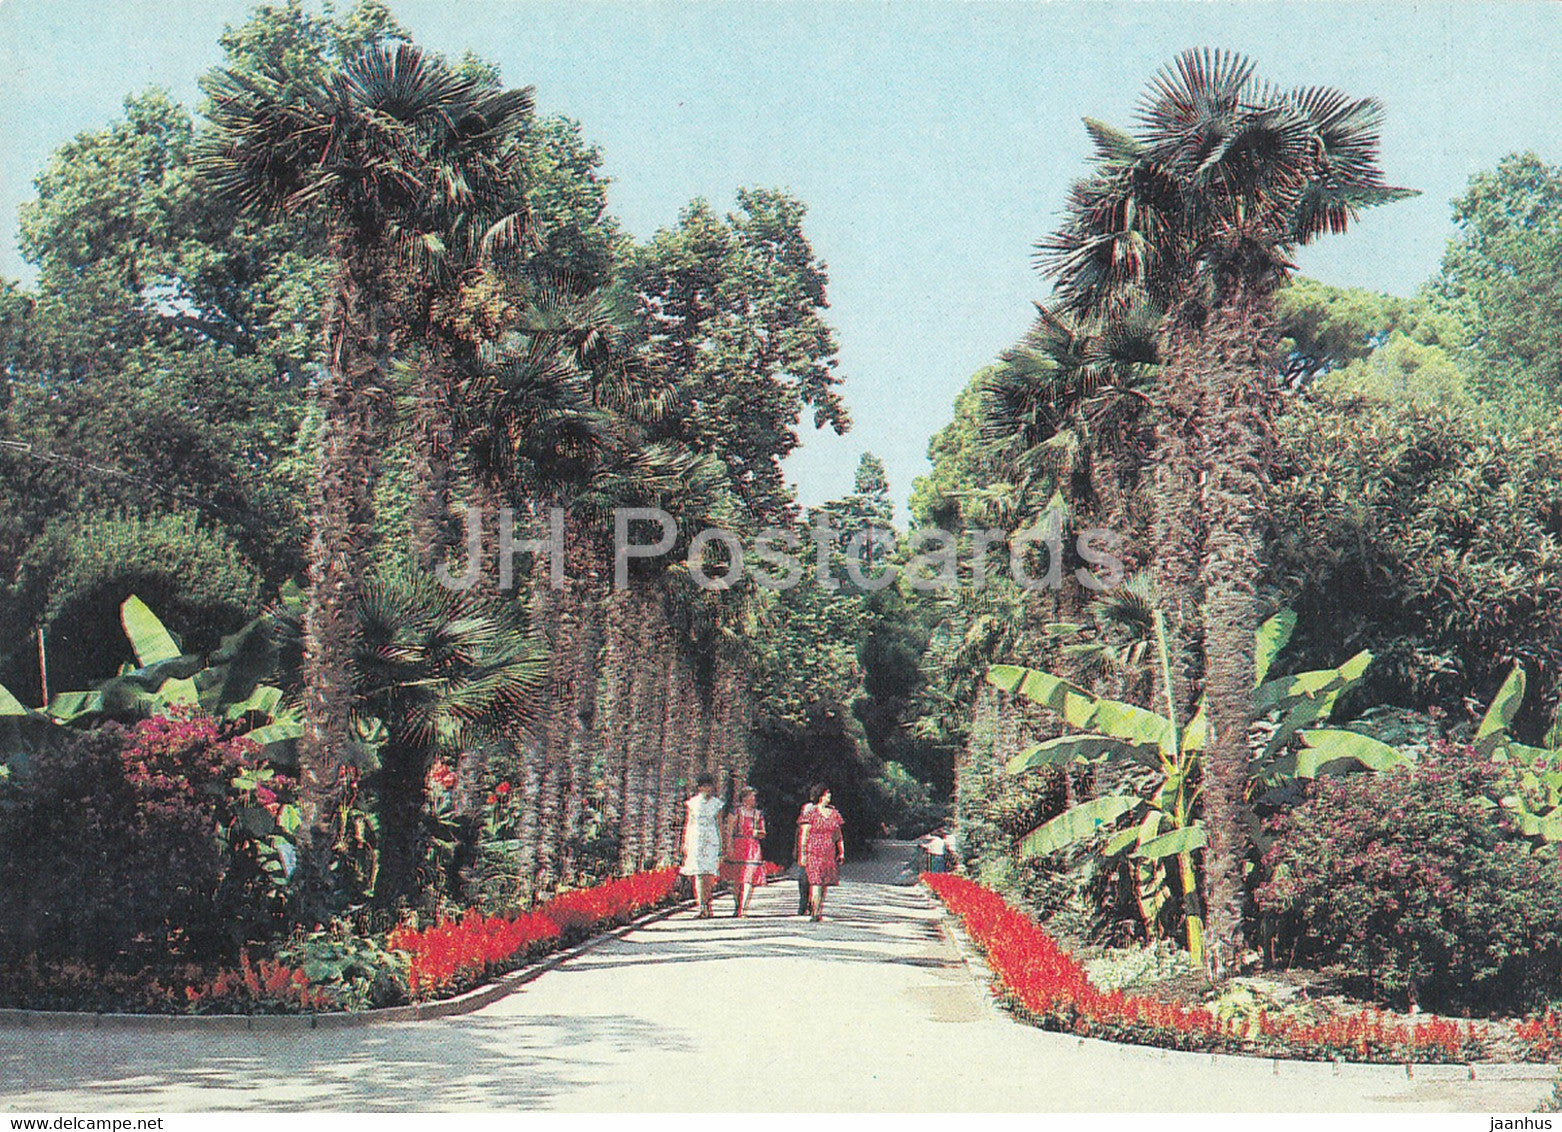 Nikitsky Botanical Garden - Palm alley in the Lower Park - Crimea - Ukraine USSR - unused - JH Postcards